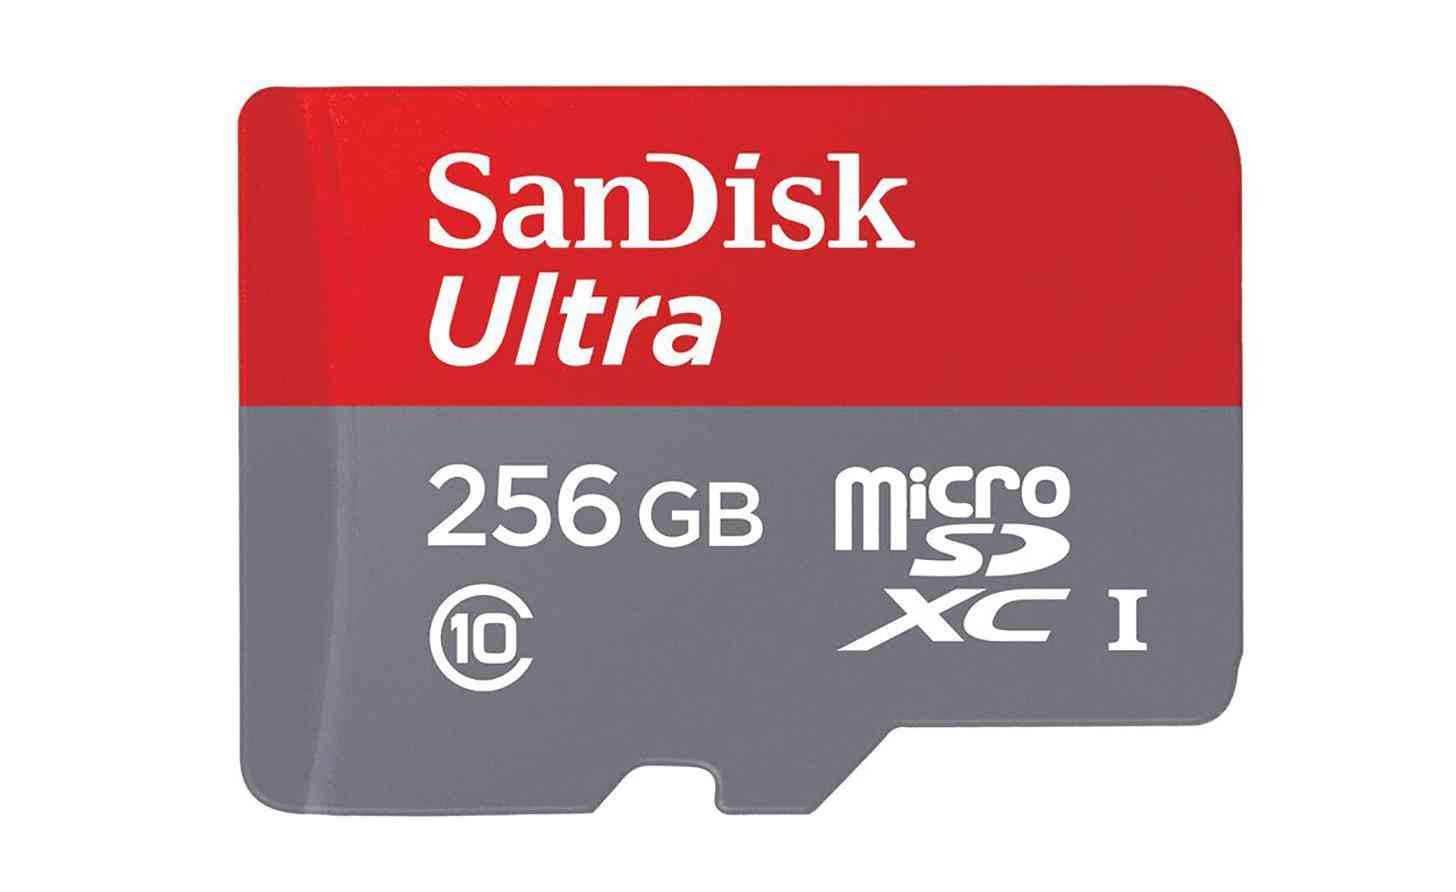 SanDisk 256GB microSD card Amazon sale